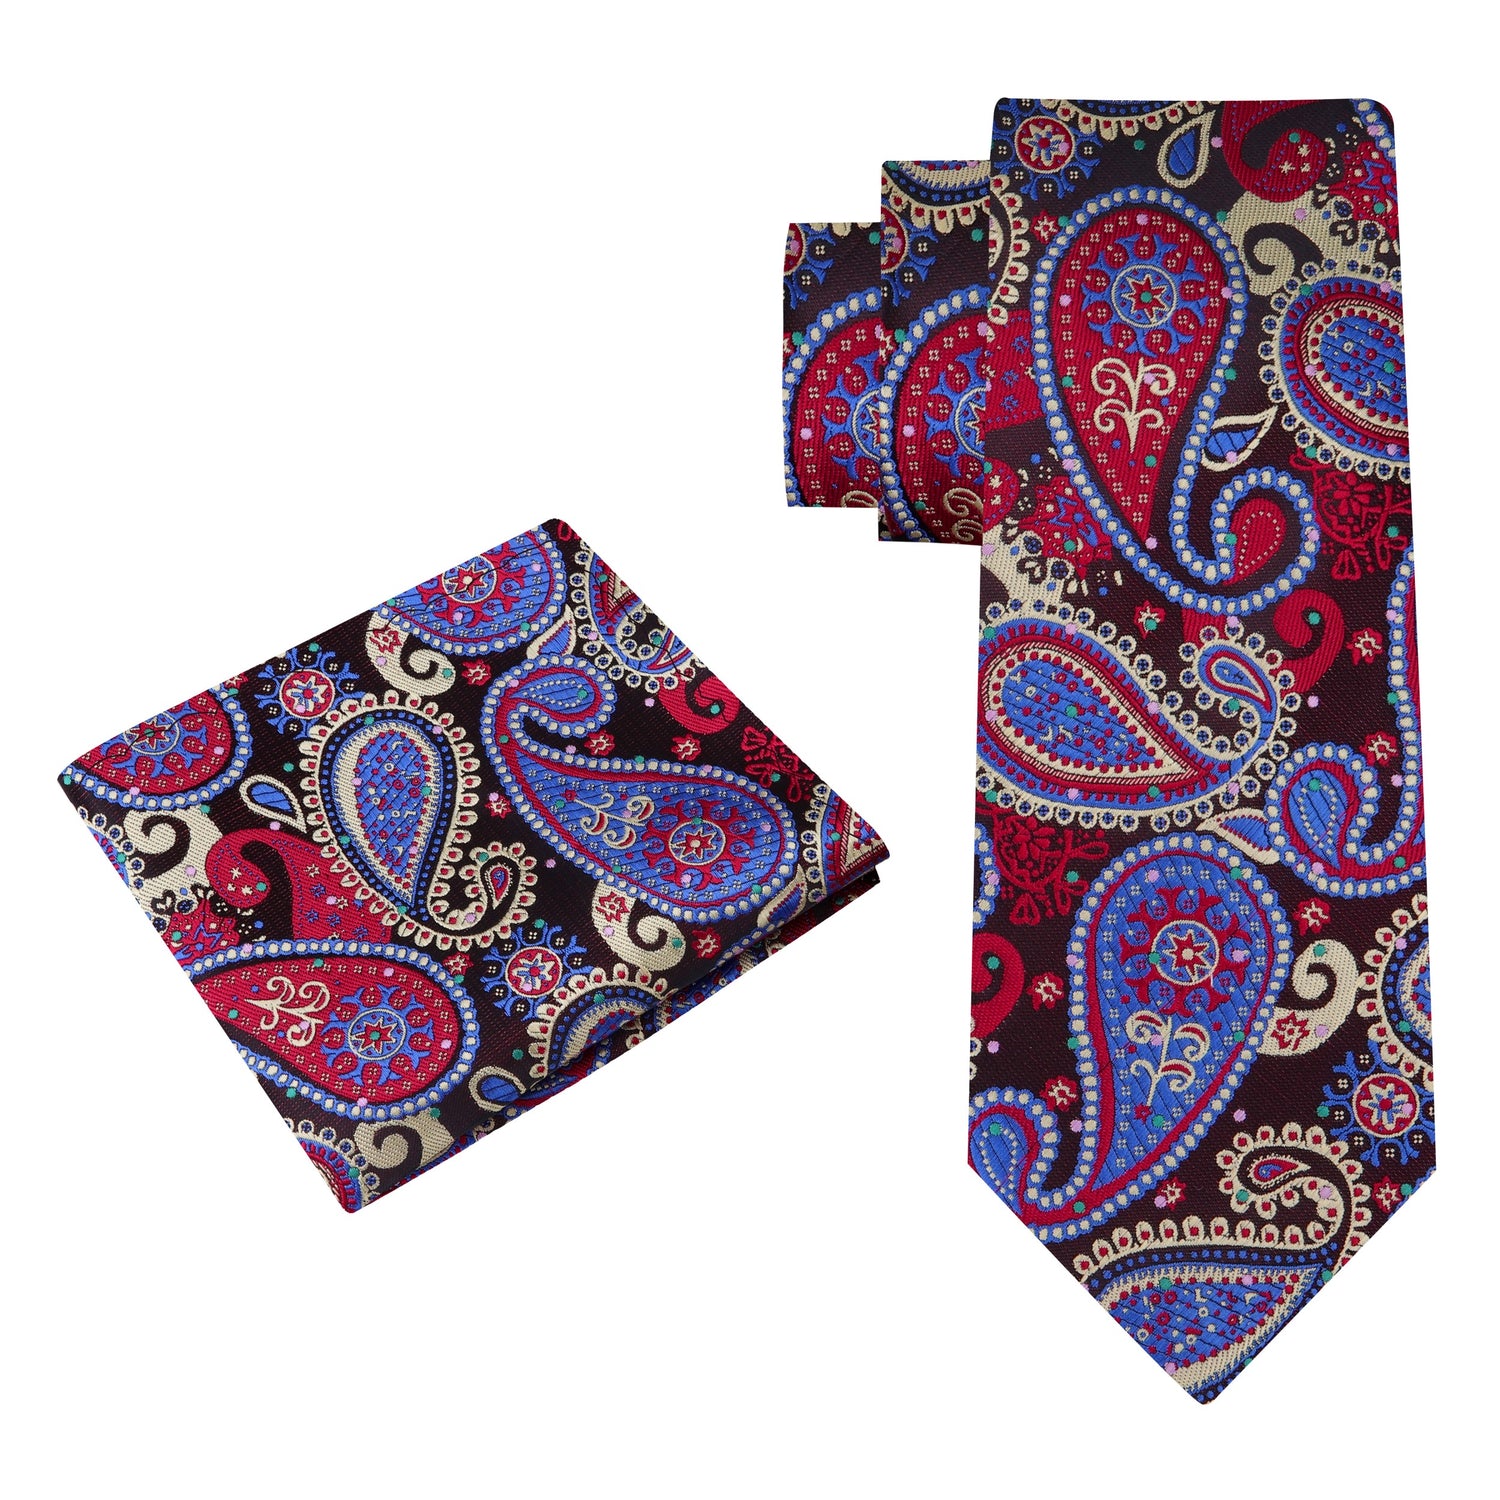 Alt View: A Red, Blue, Cream Paisley Pattern Silk Necktie, Matching Pocket Square